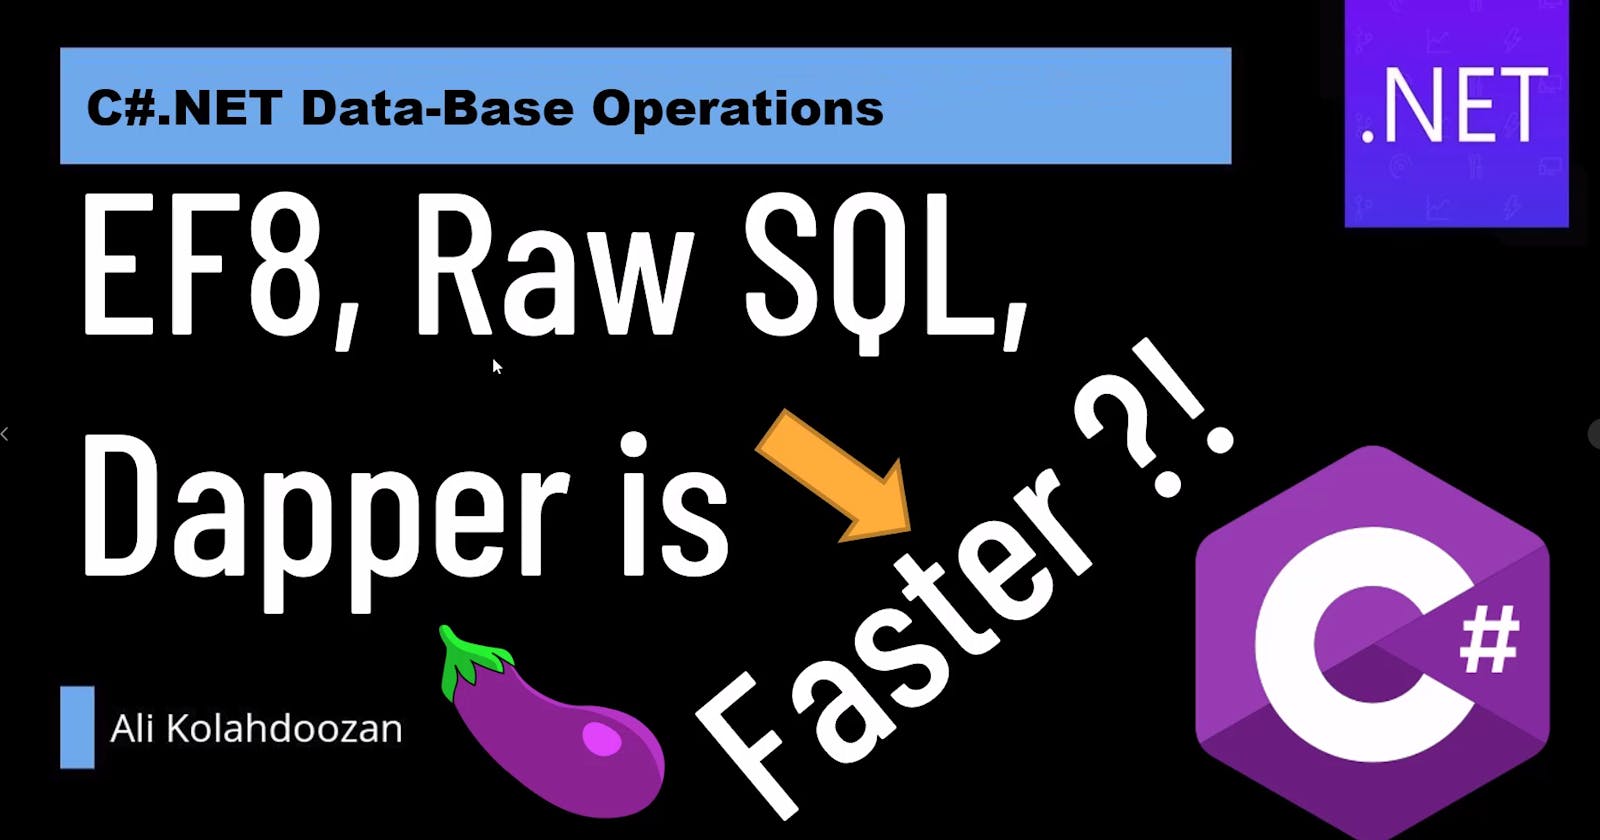 EF8, Raw SQL, but Dapper is FASTER !!!